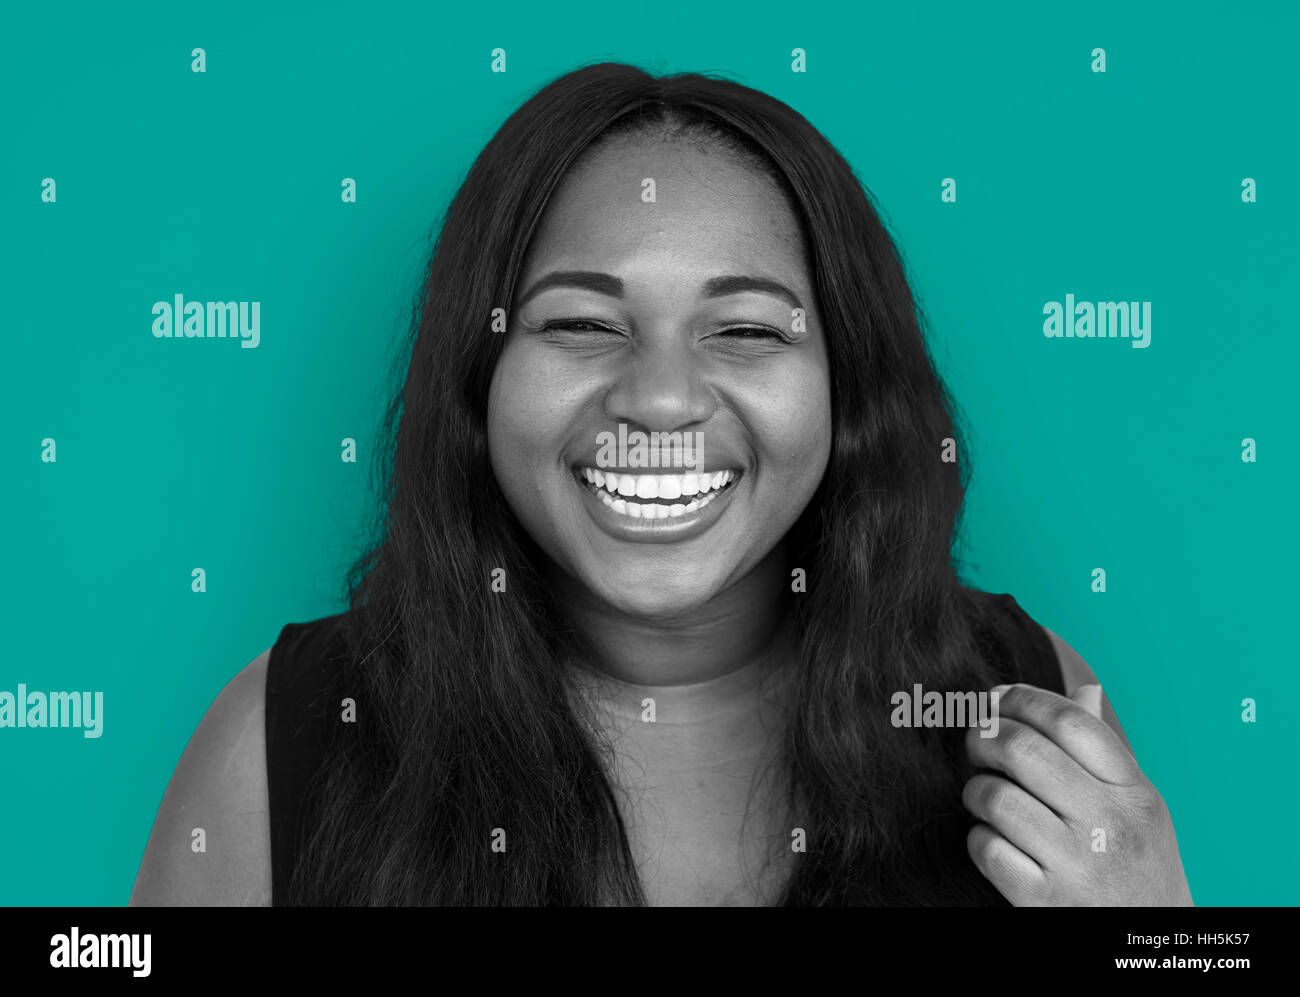 Woman Smiling Happiness Portrait Concept Stock Photo